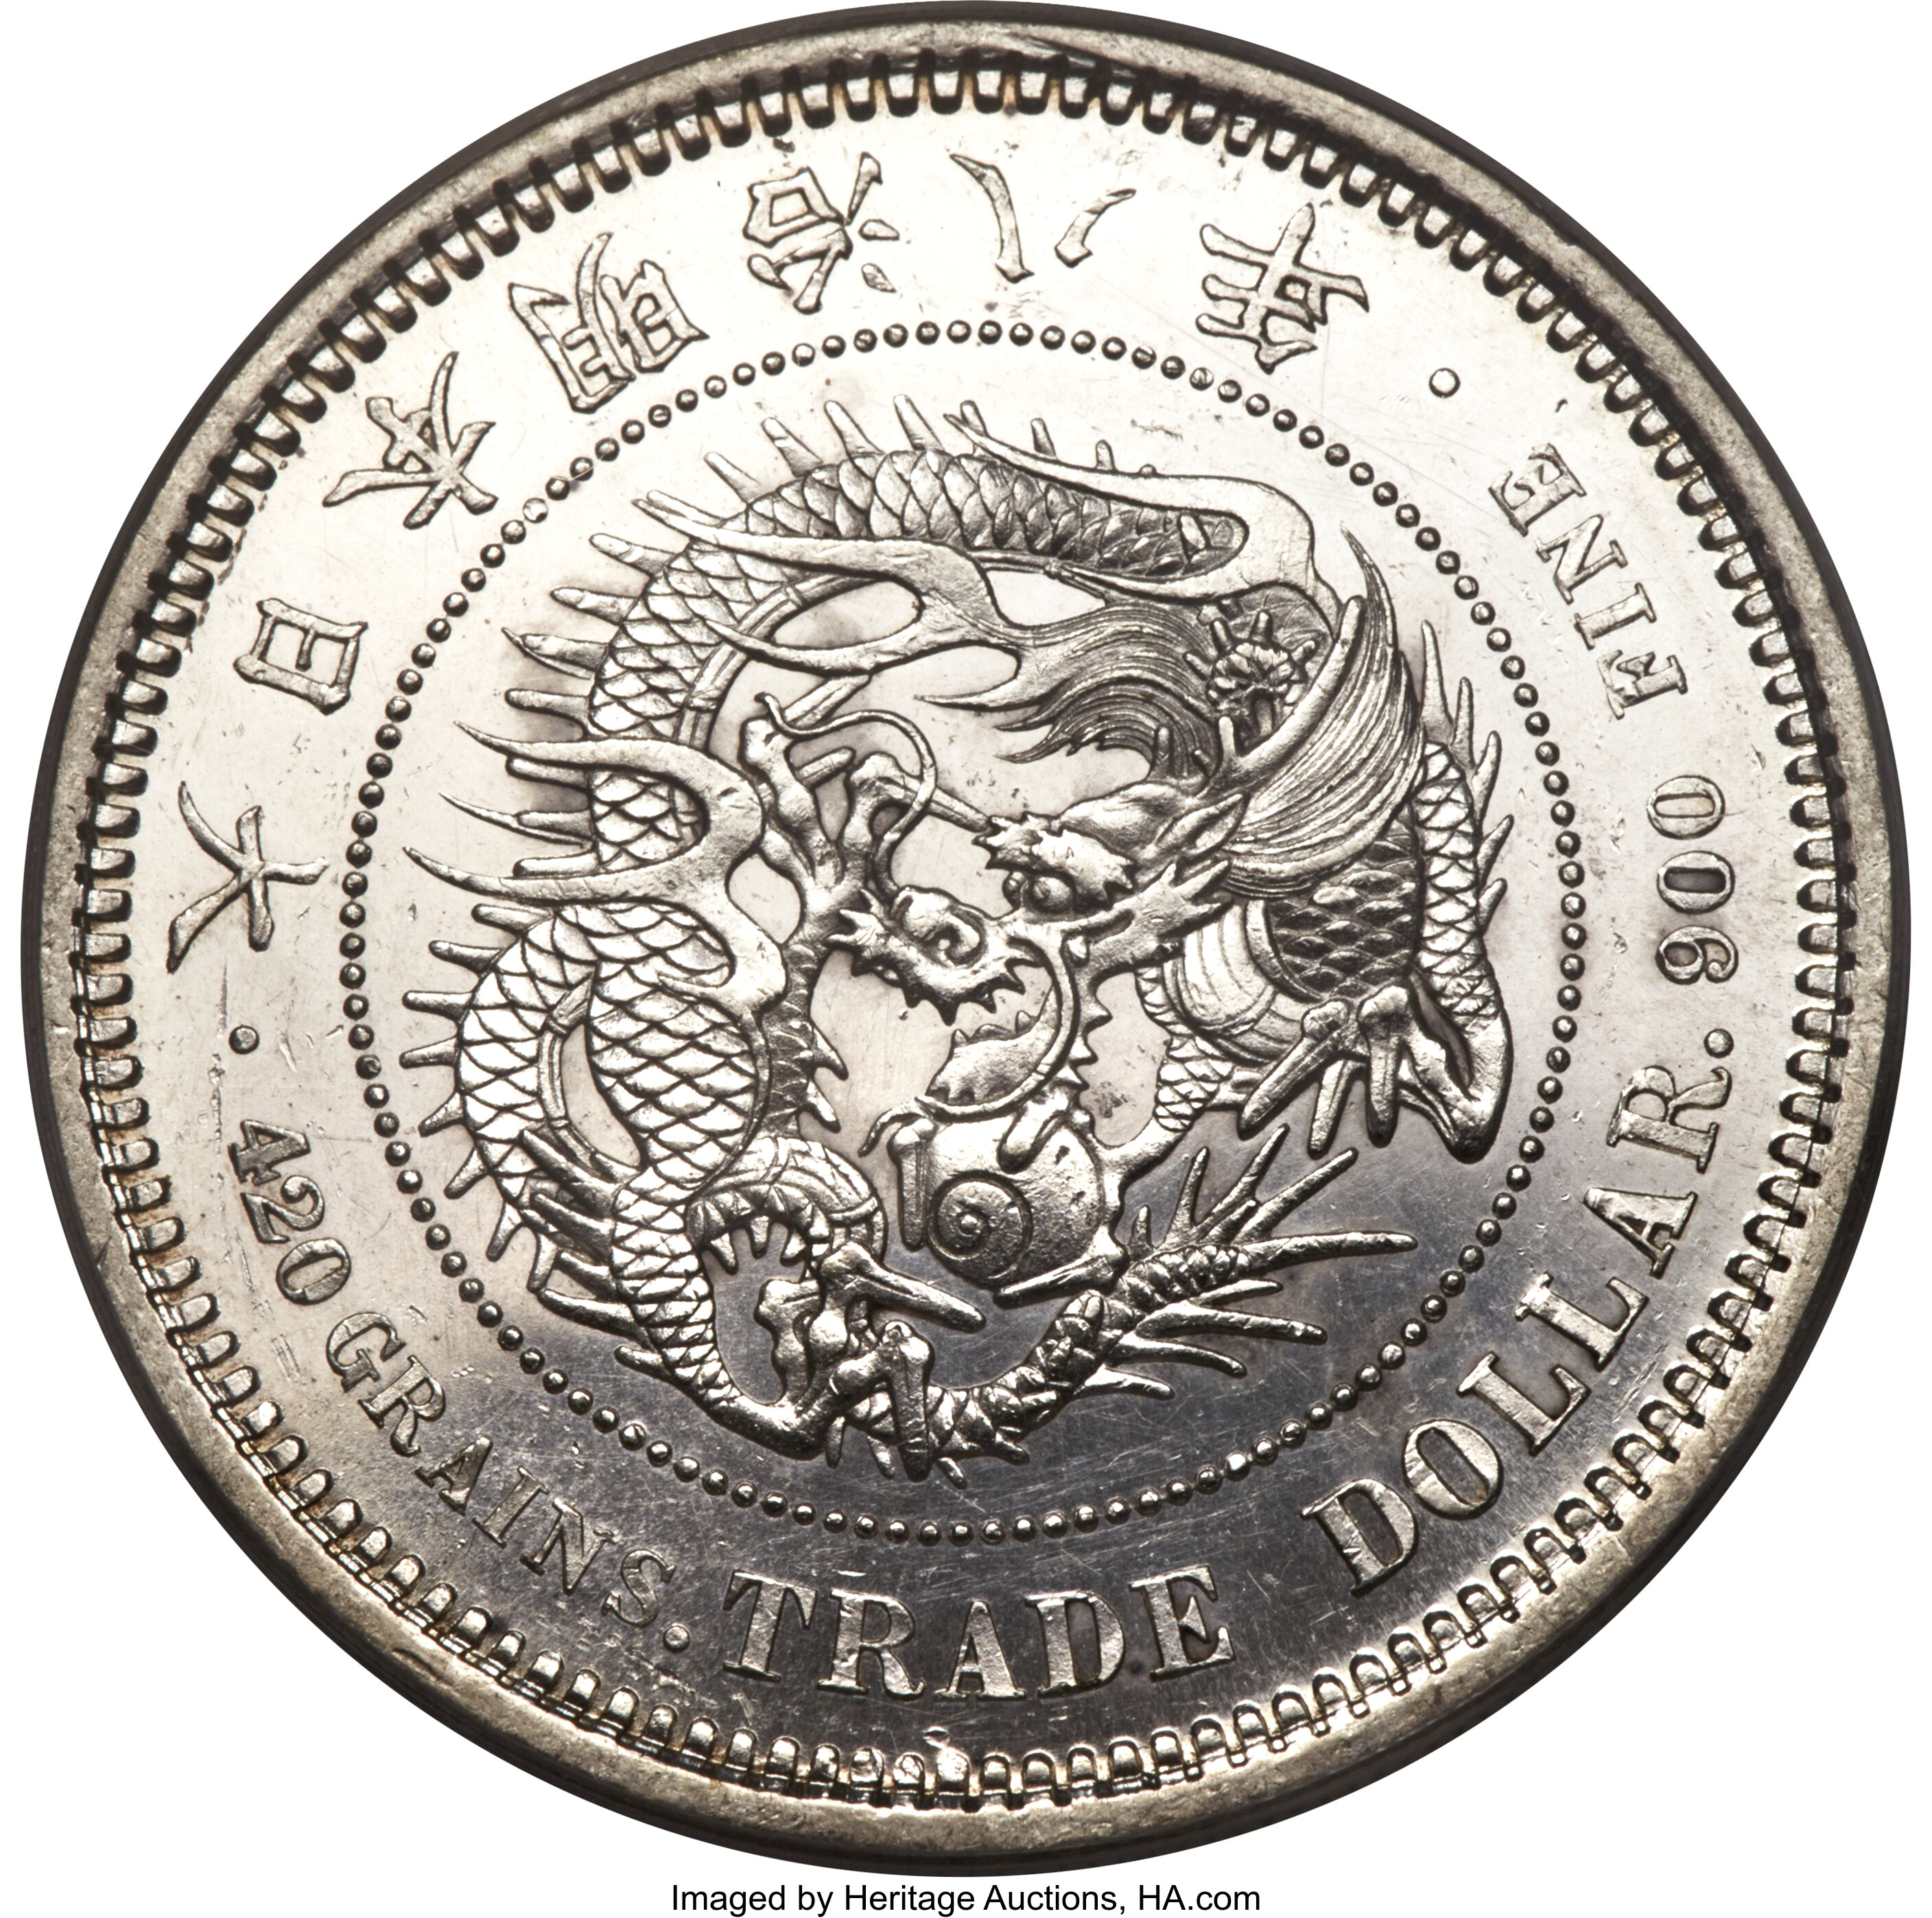 Japan: Meiji Trade Dollar Year 8 (1875) UNC Details (Cleaning